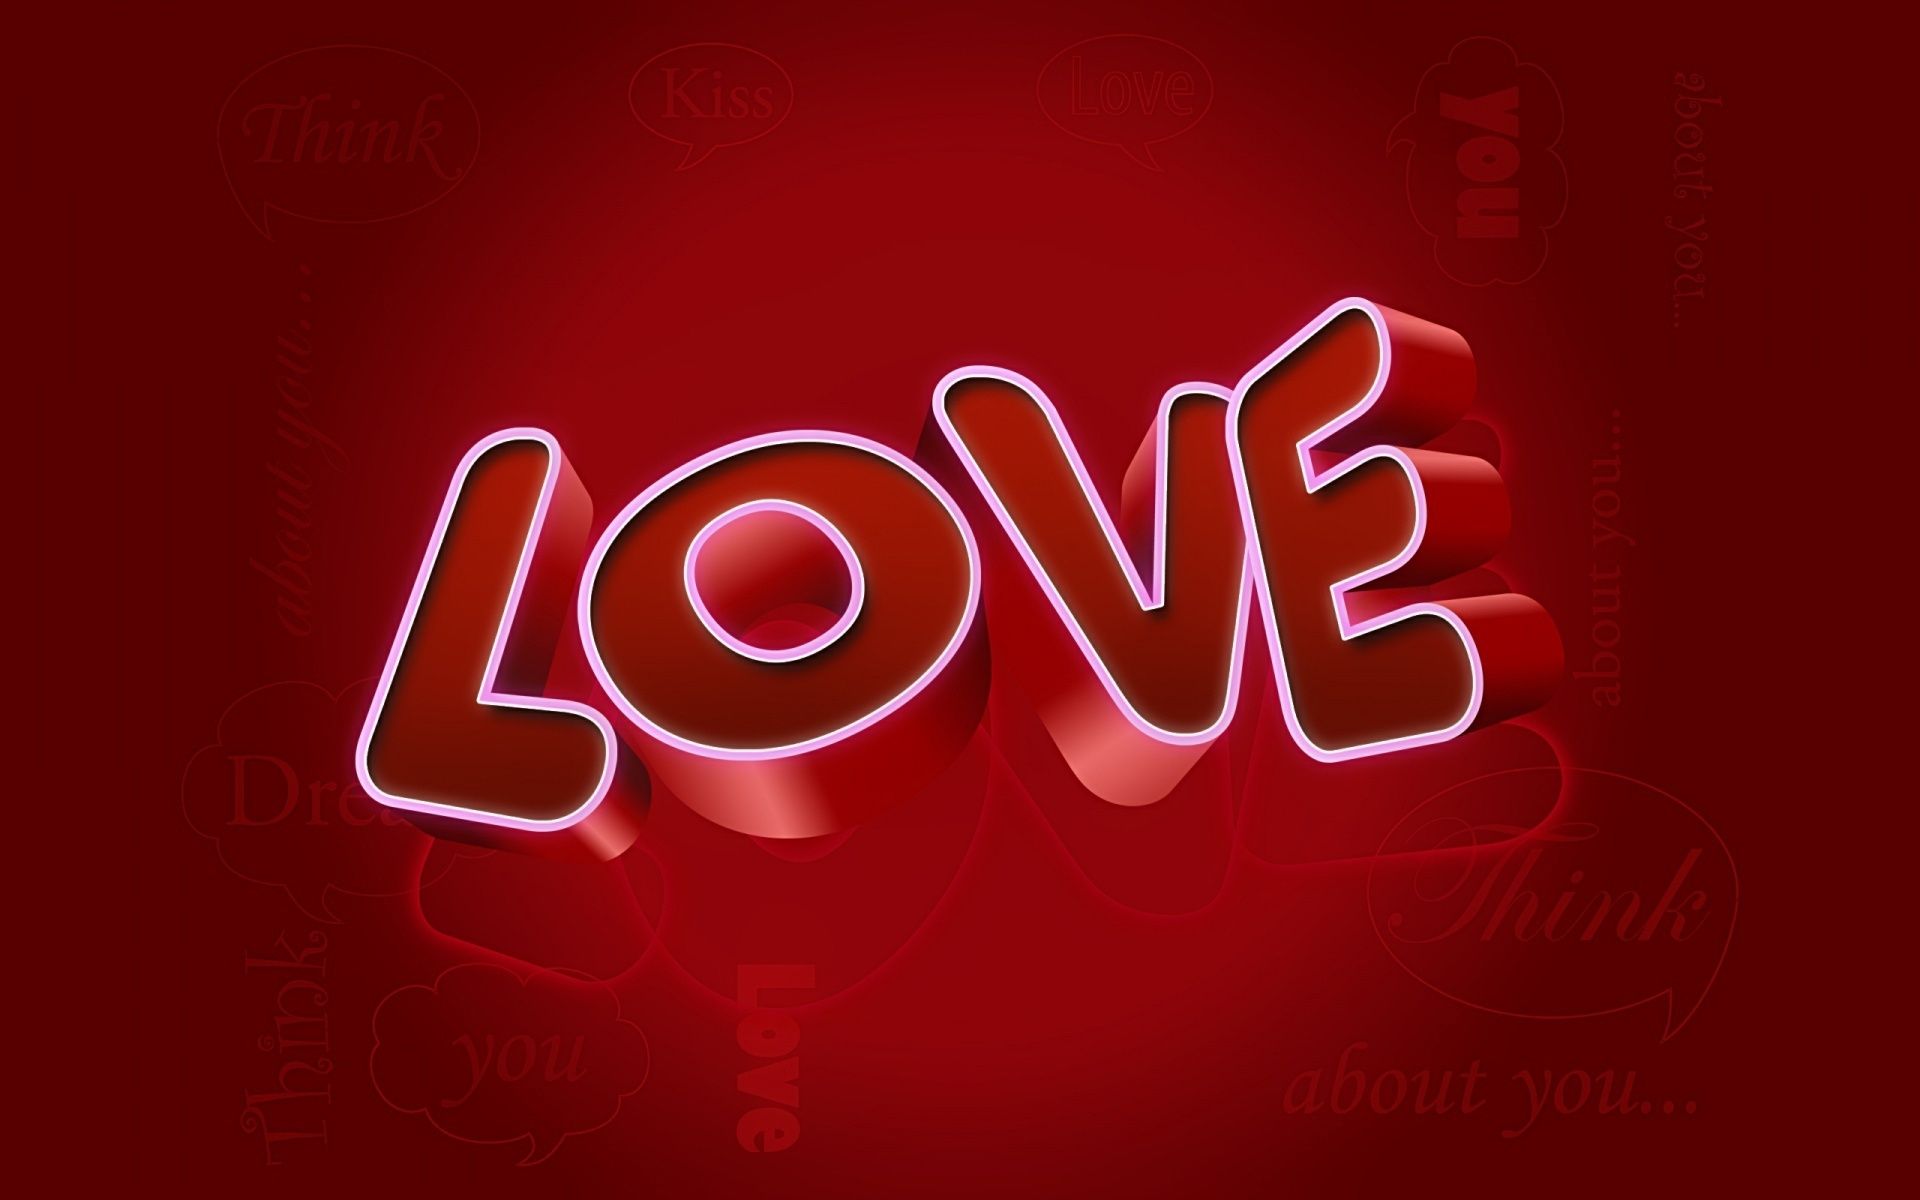 labels love symbol romance heart desktop design illustration romantic greeting card celebration abstract image sign art shape